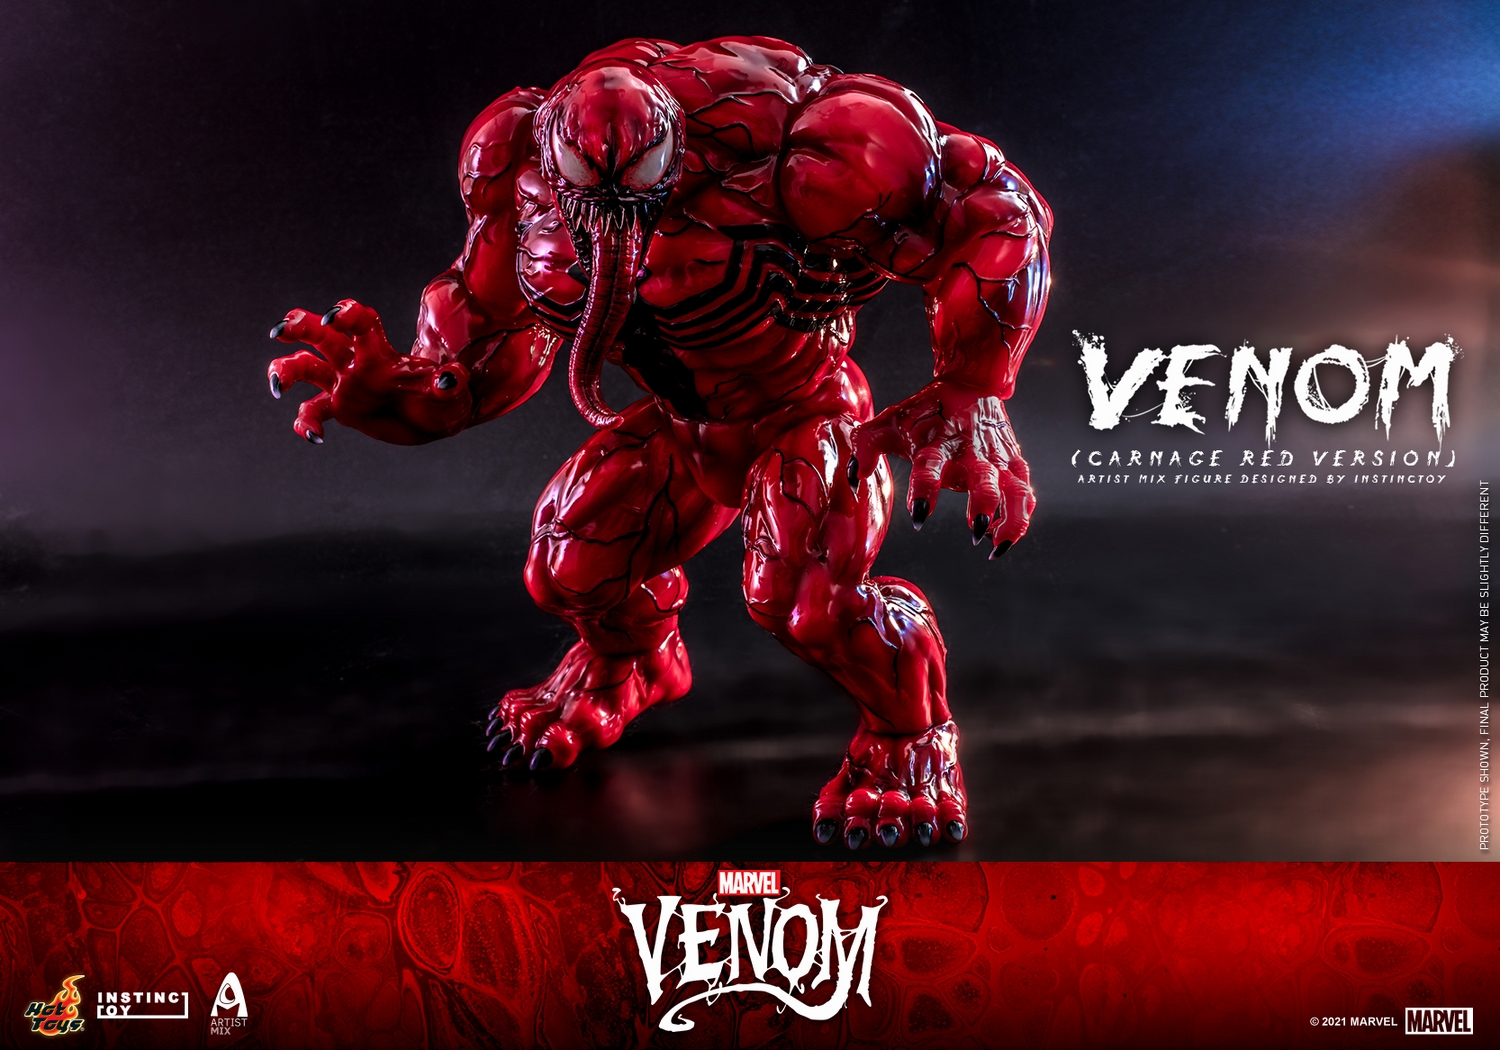 Hot Toys - Venom (Carnage Red Version) Artist Mix Figure Designed by Instinctoy_PR5.jpg